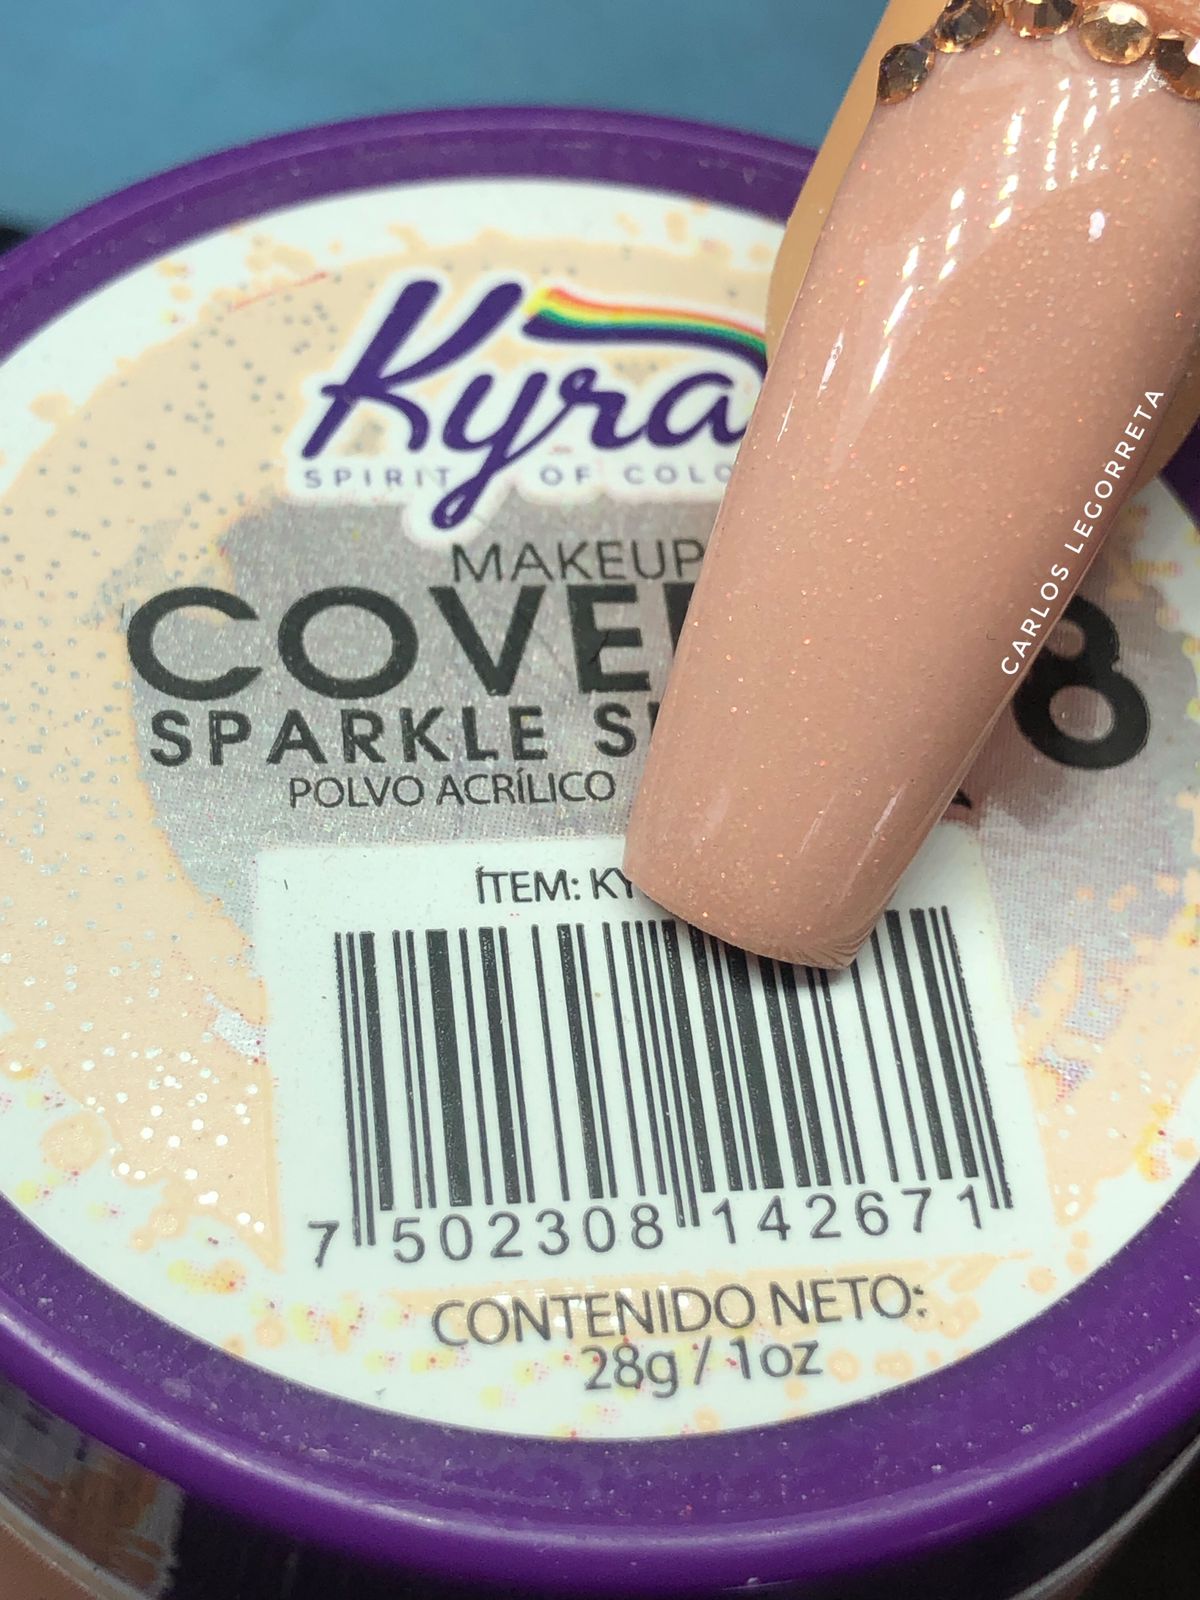 Kyra Spirit - Acrilico Makeup Cover Sparkle Skin 28grs #8